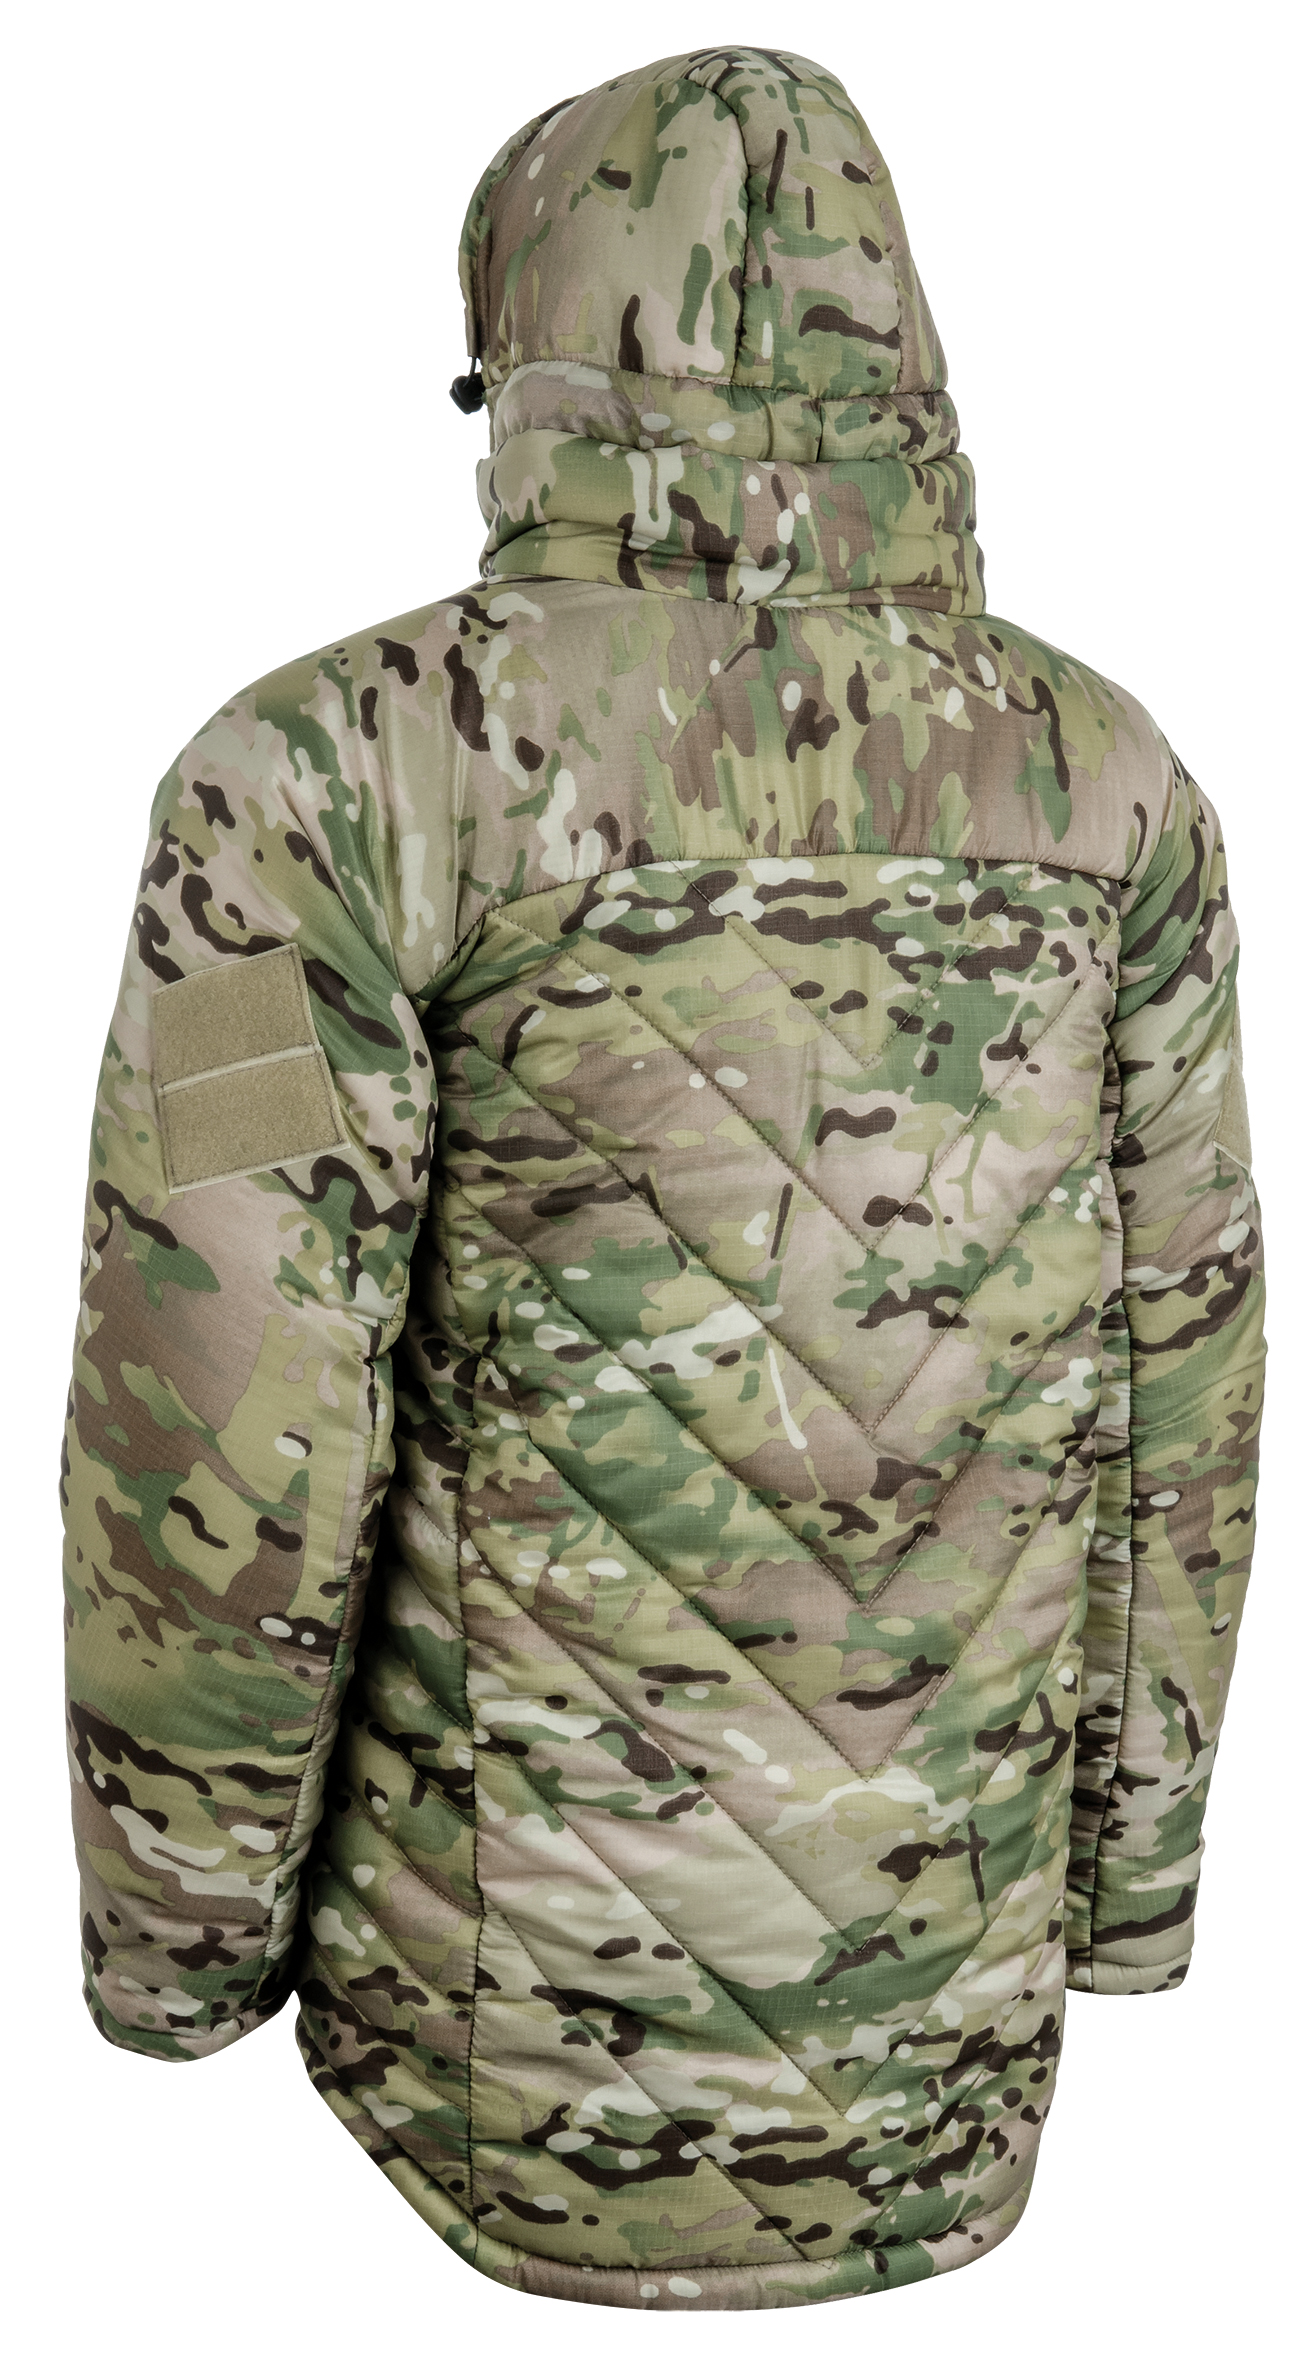 Snugpak SJ12 Yeti thermal jacket | Recon Company